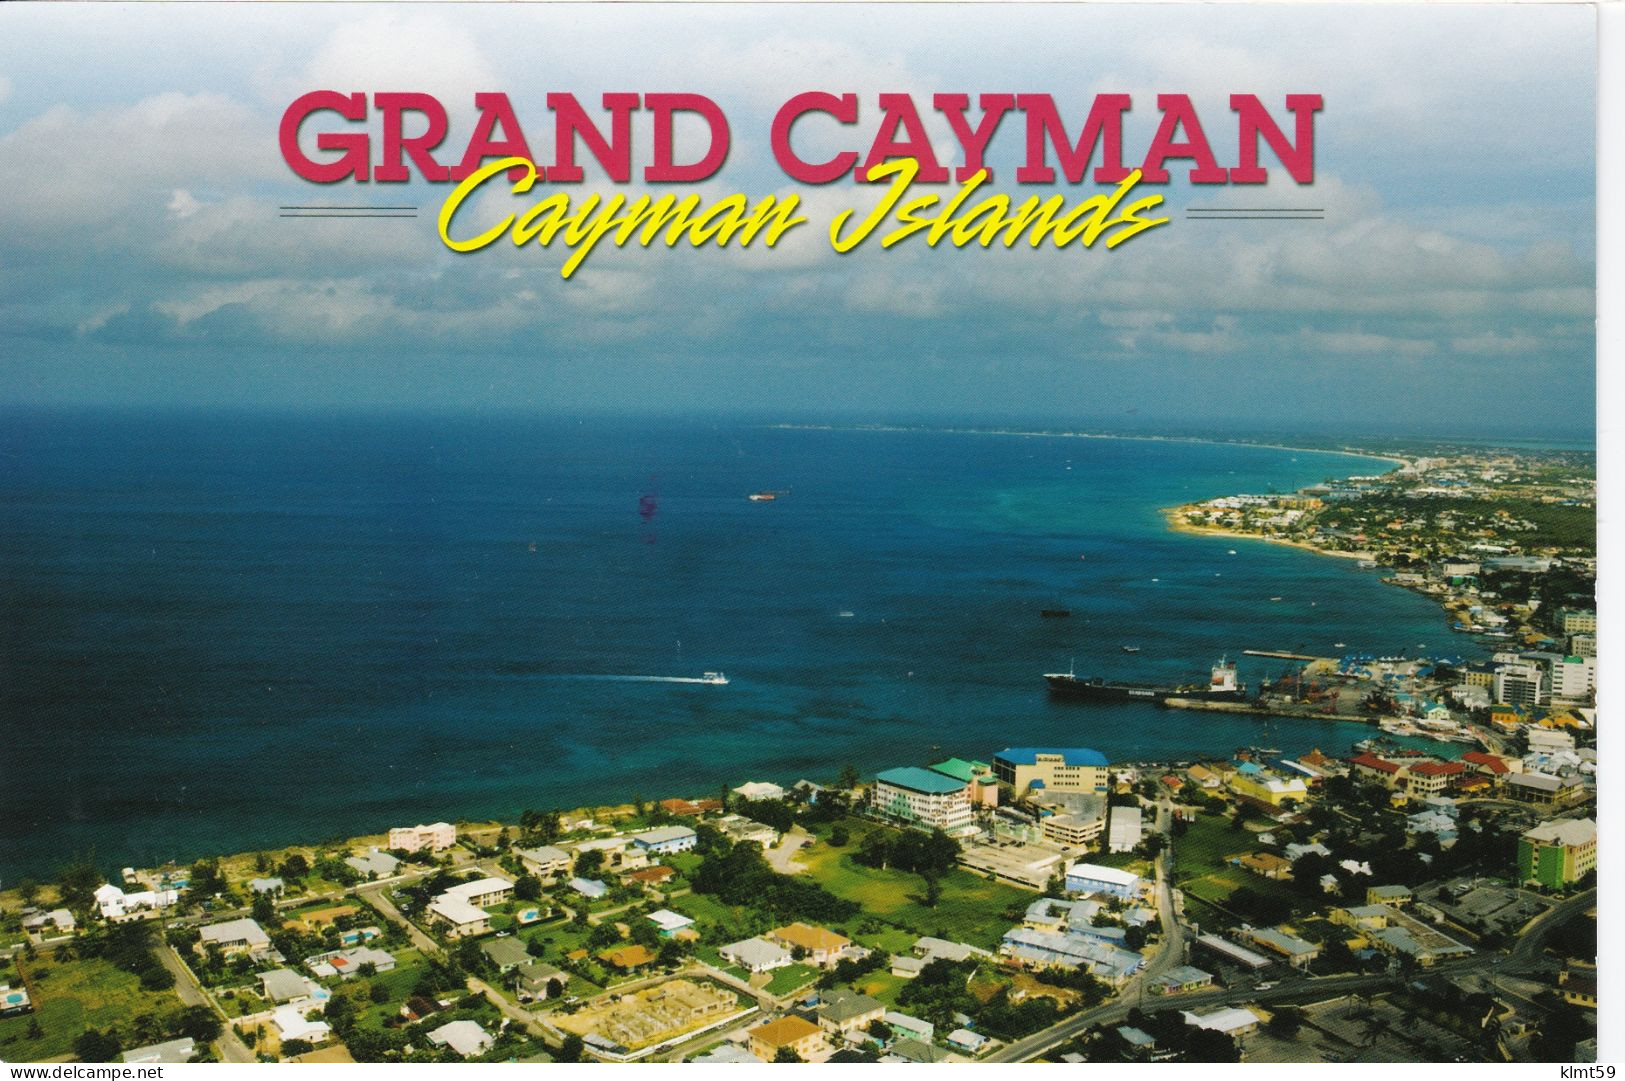 Grand Cayman - Cayman Islands